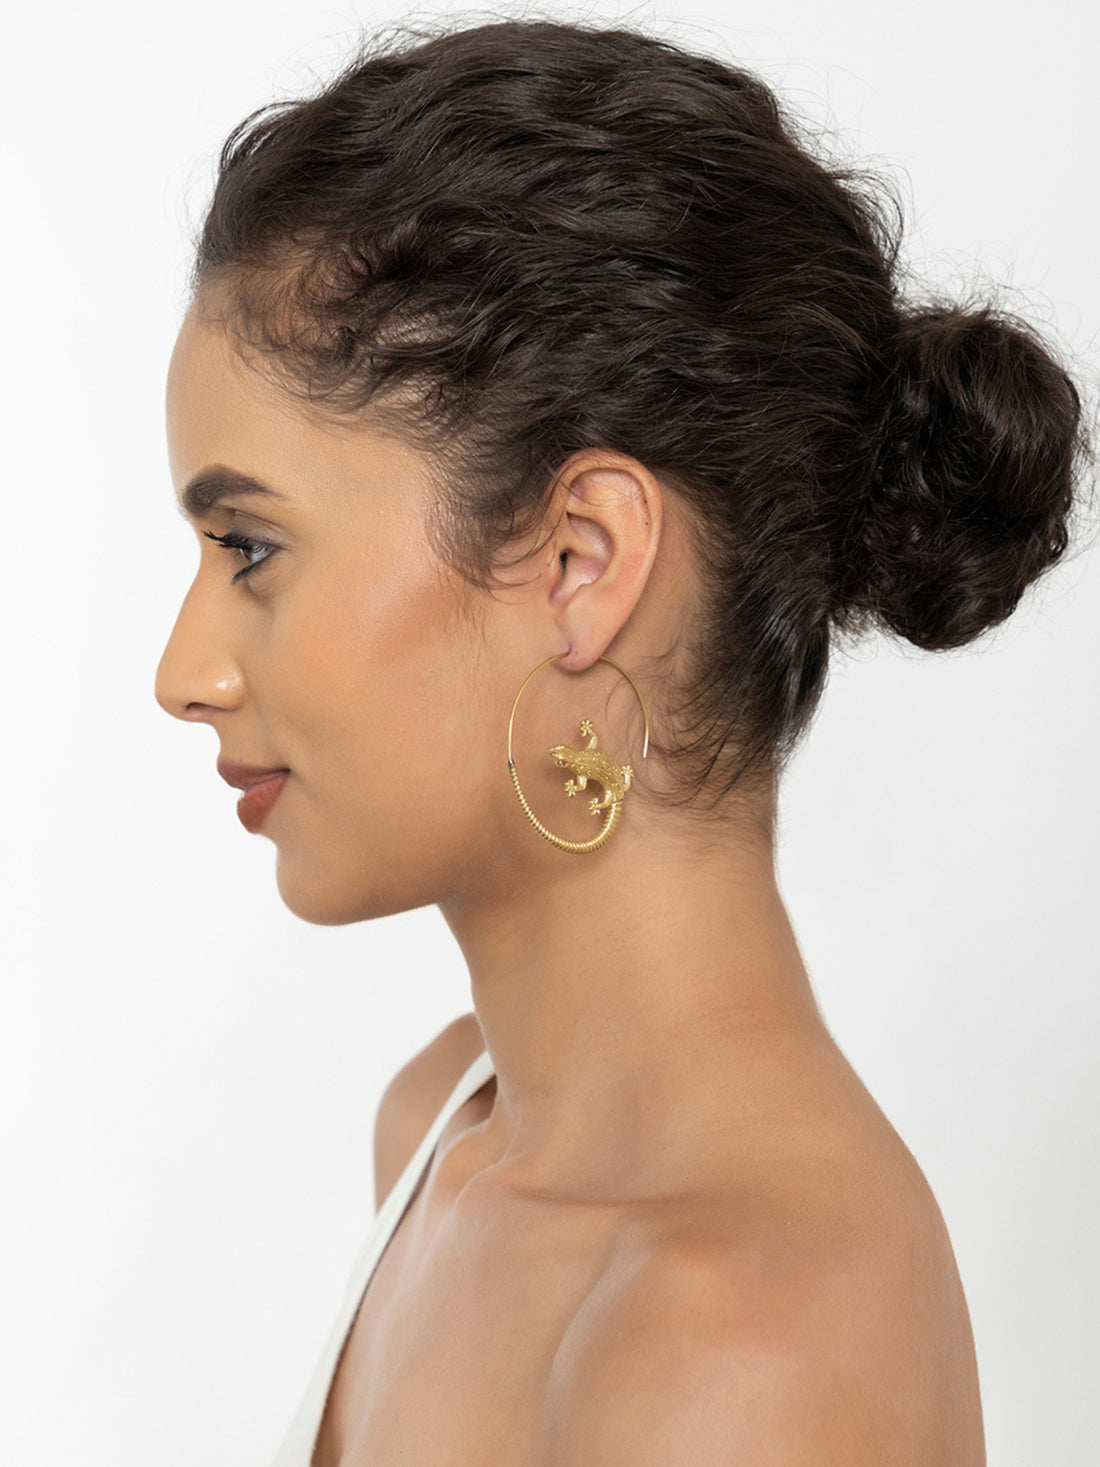 Party Wear Hoops Earrings - Western Gold and Silver-Plated Brass Earrings By Studio One Love